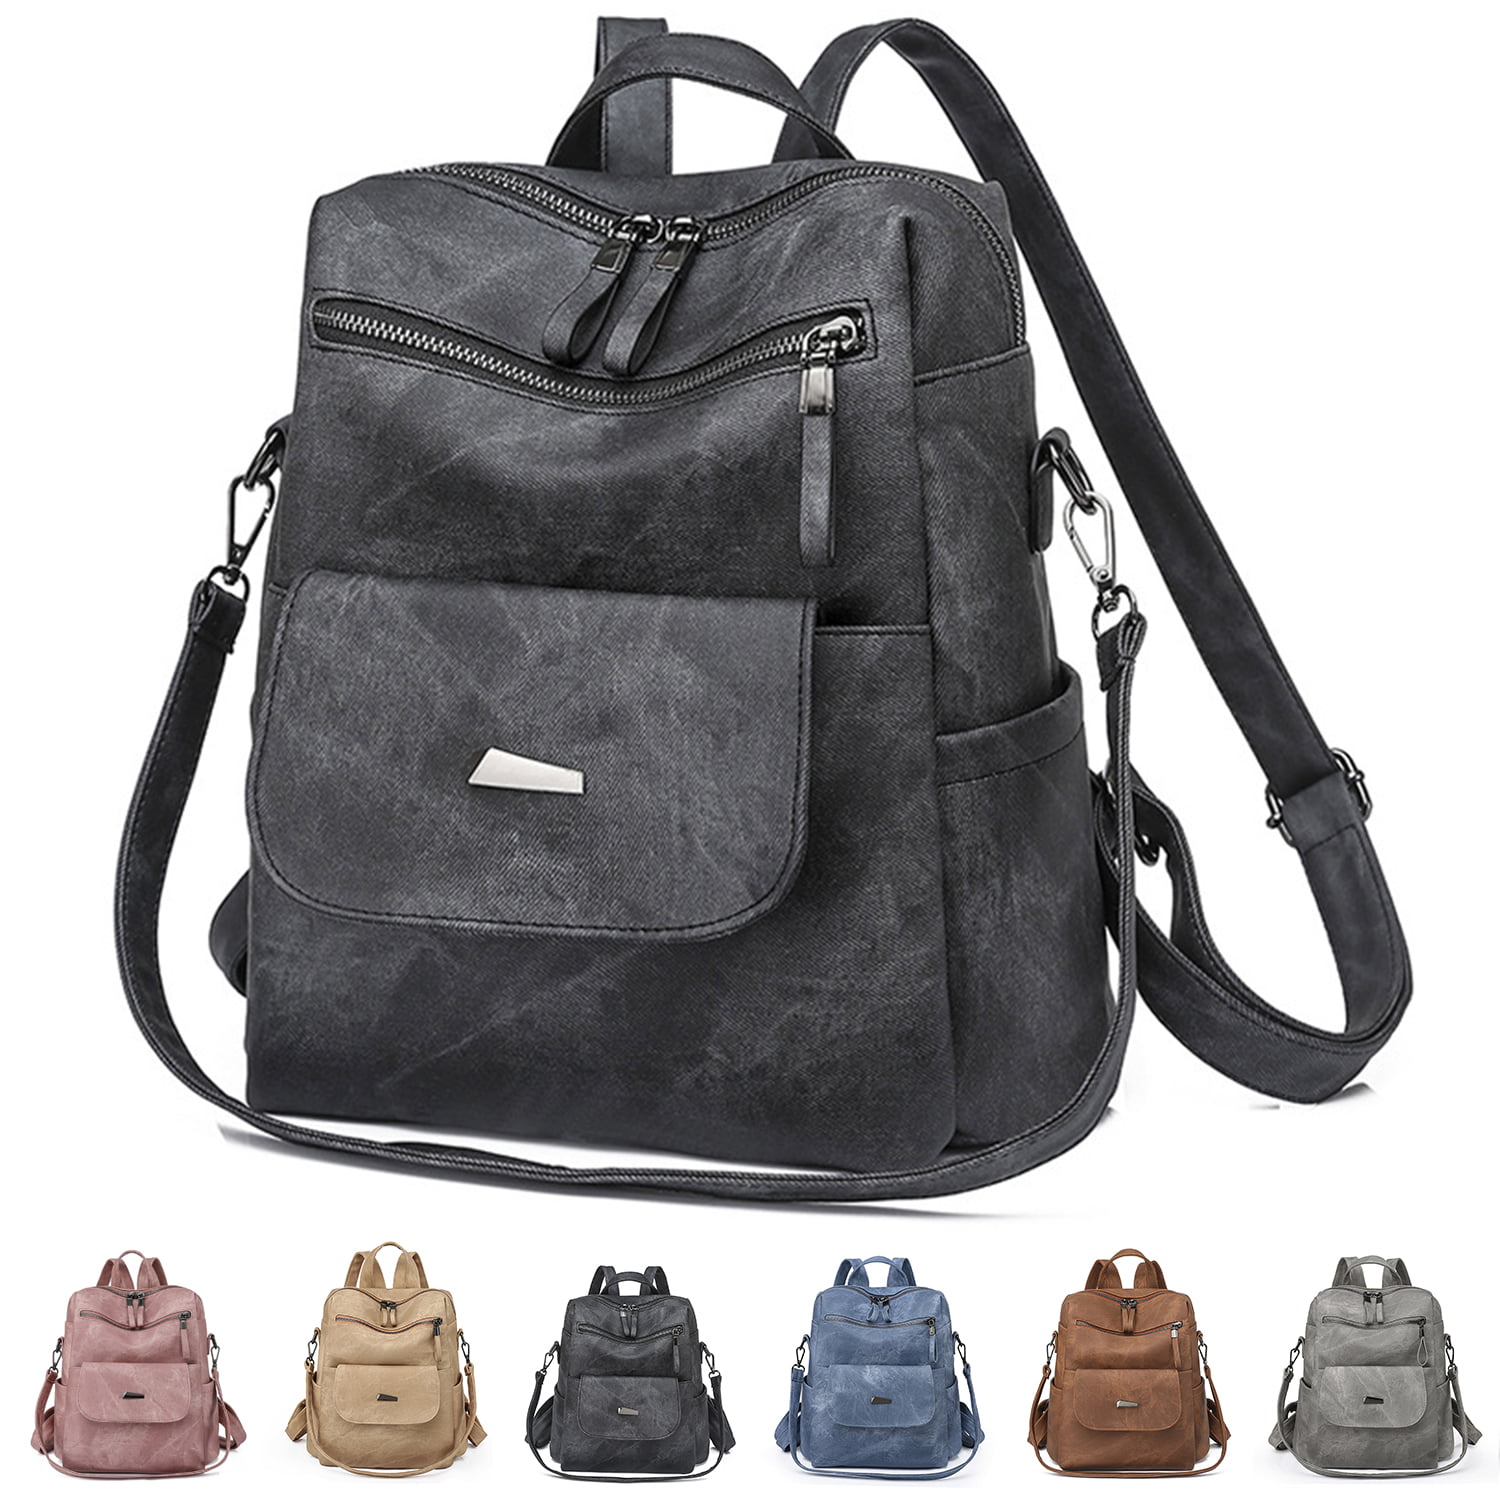 YOMYM Women's Fashion Backpack Purses Multipurpose Design Handbags